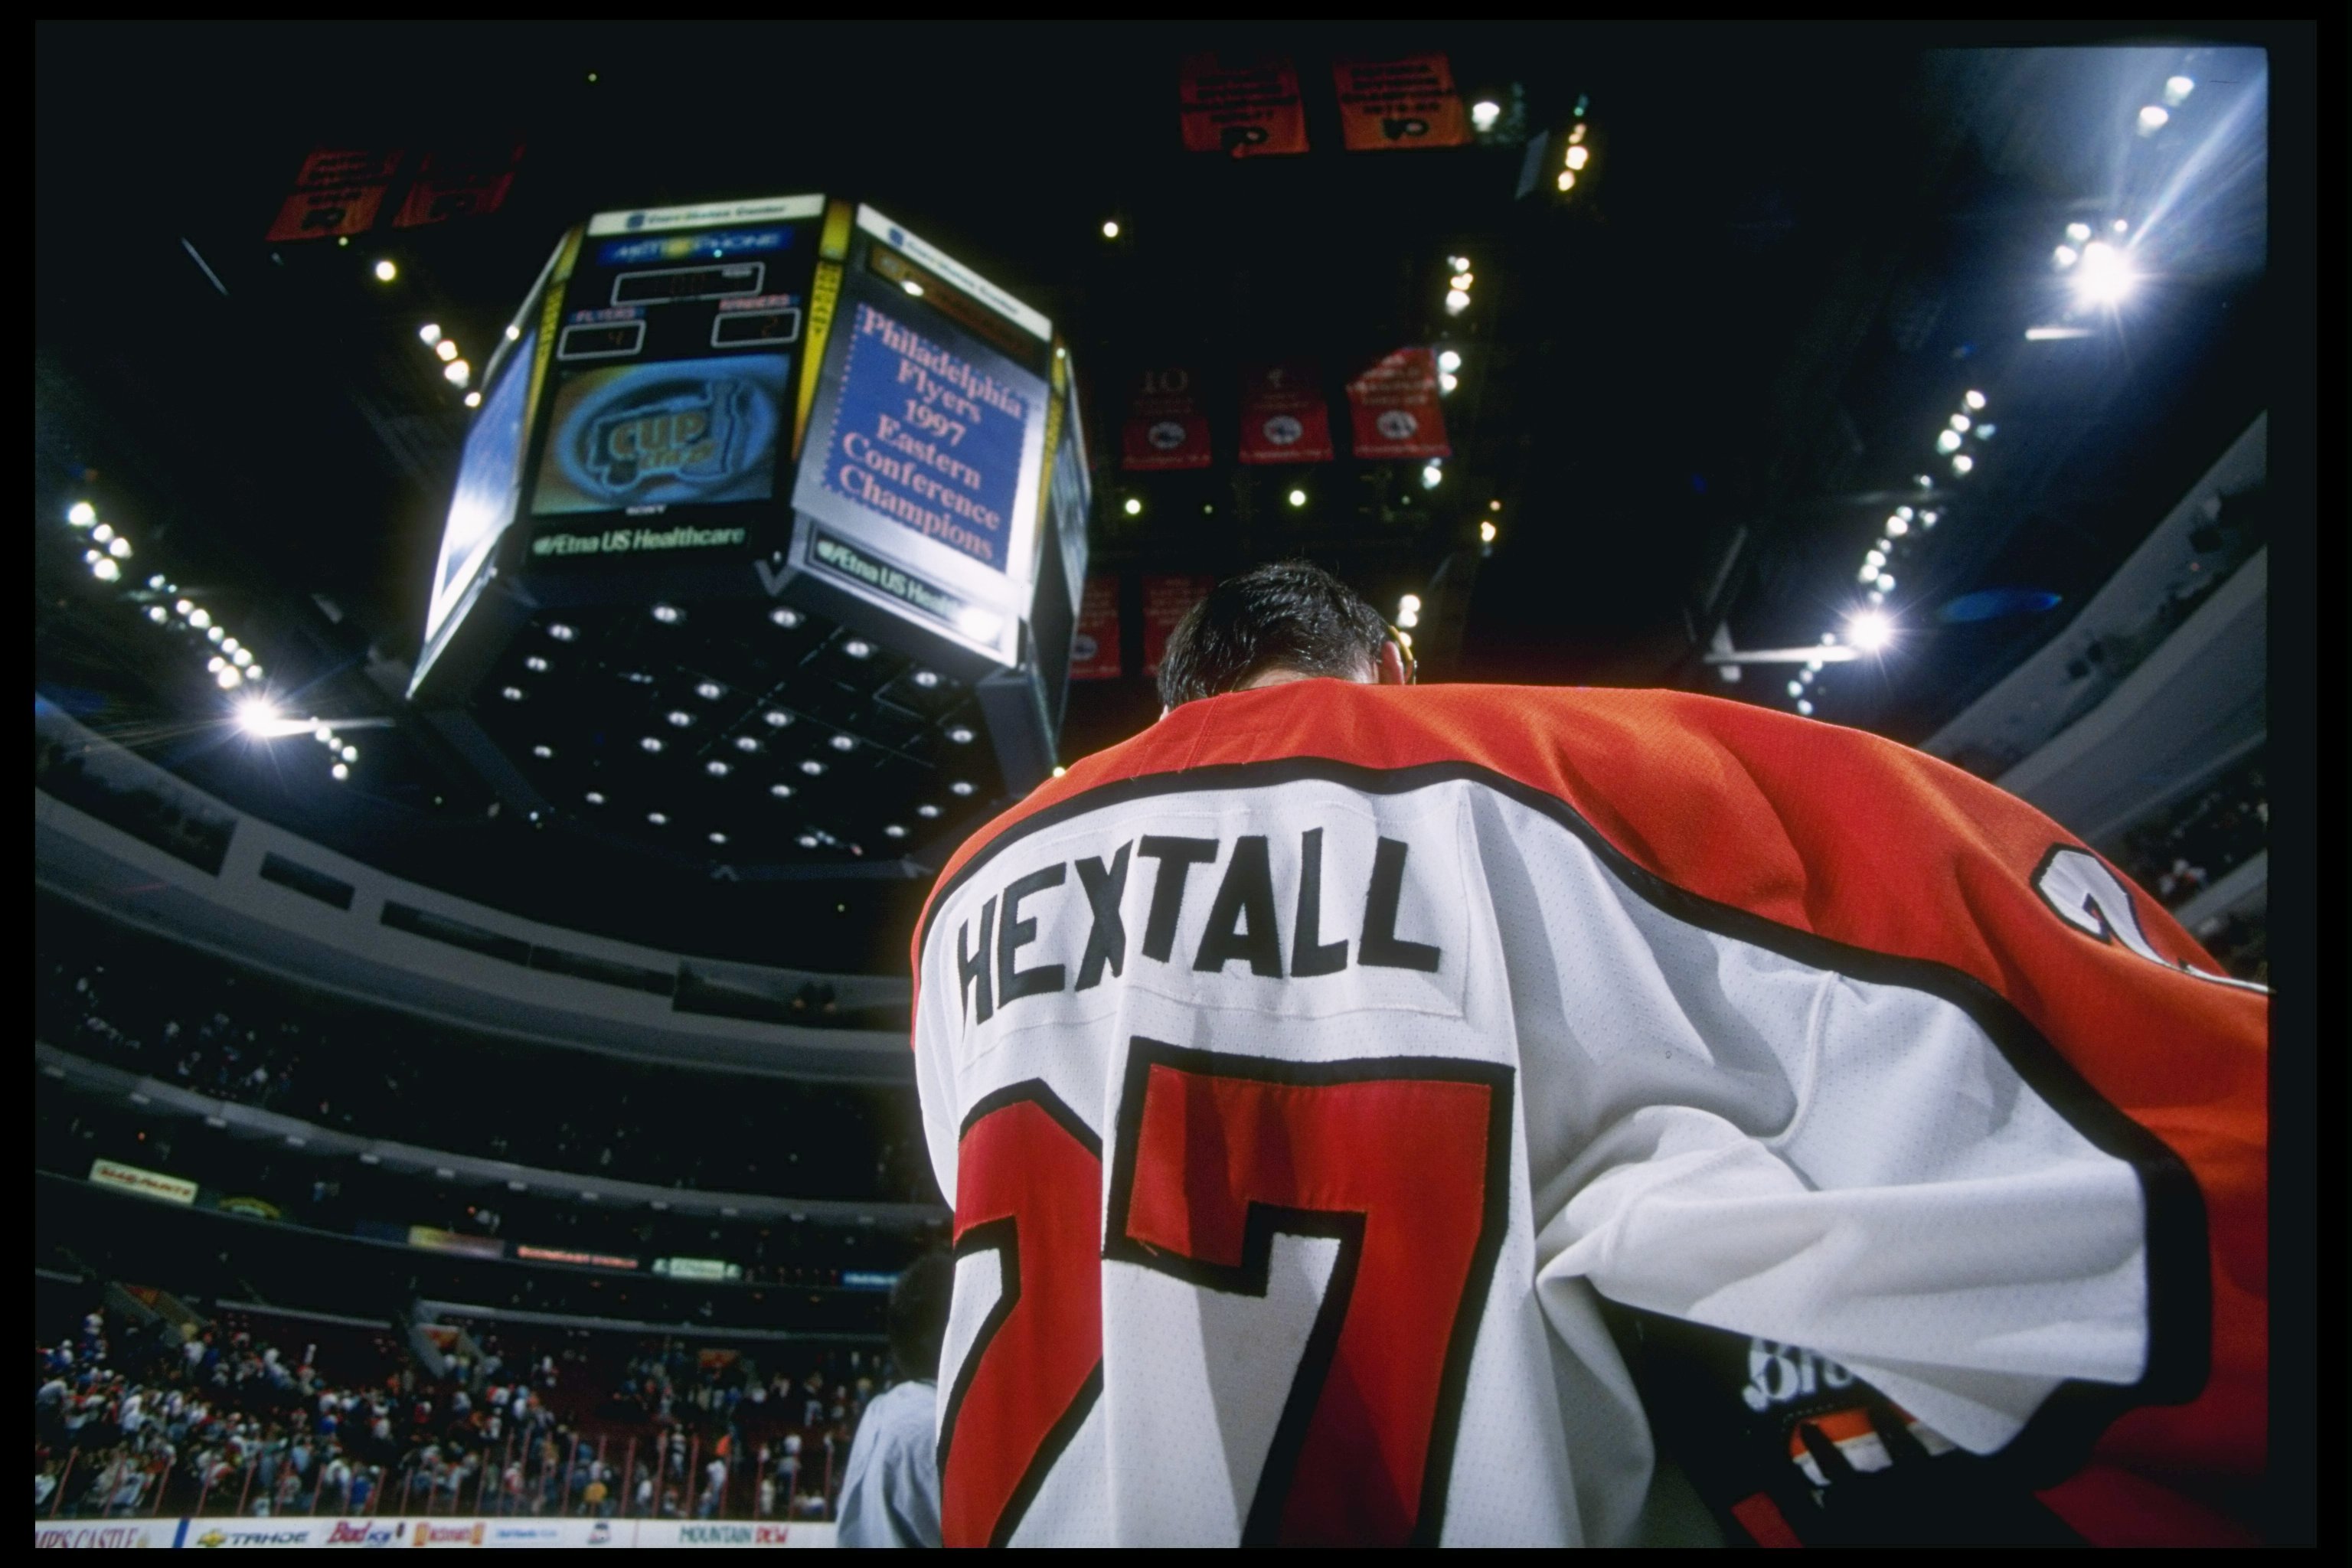 1997 Regular Series - Ron Hextall